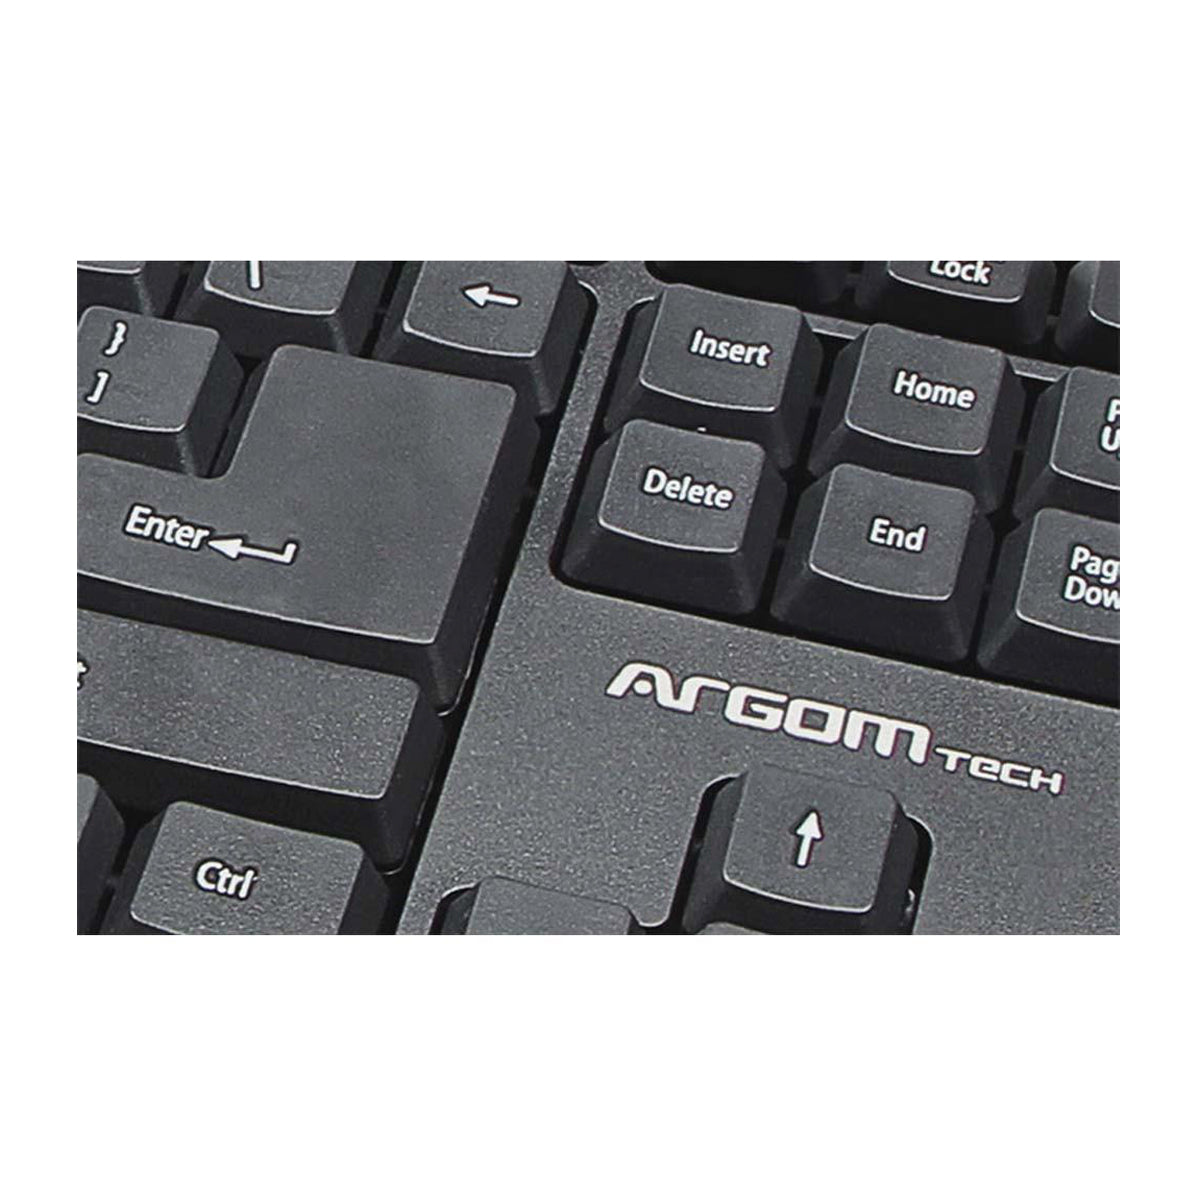 Teclado Clásico Inglés USB  Argom